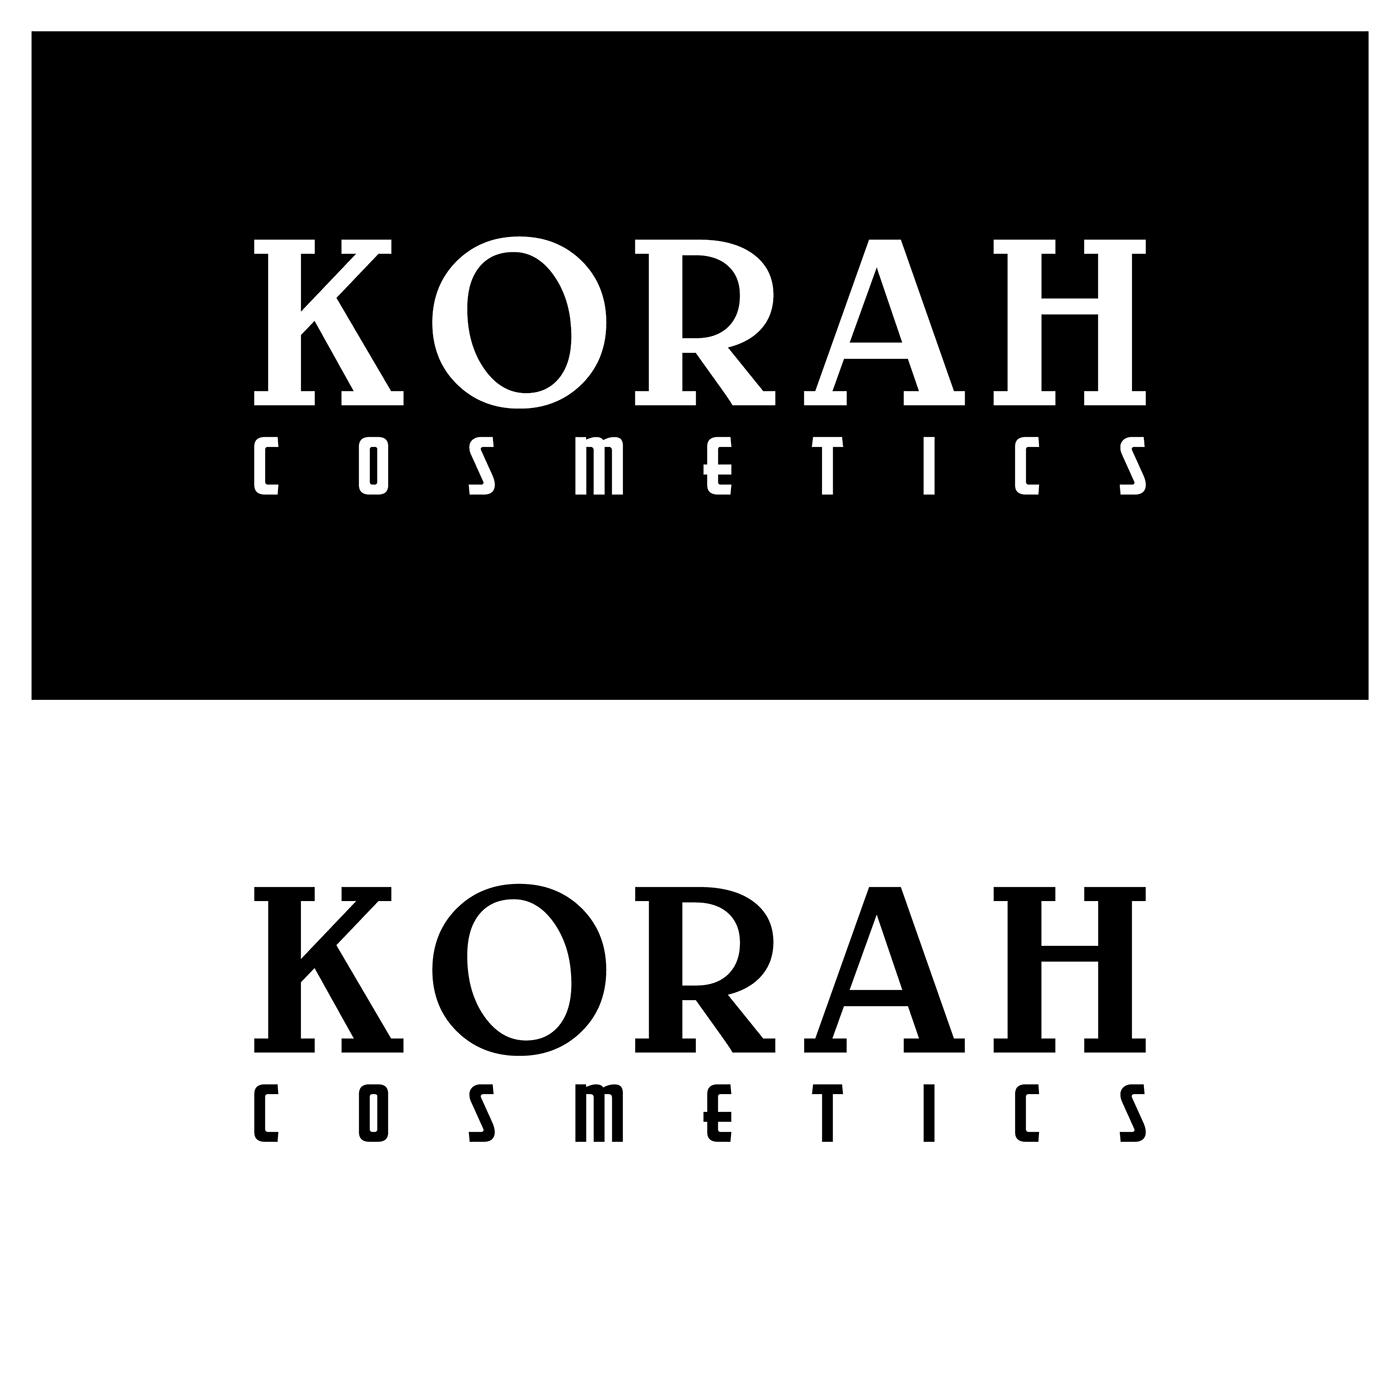 ANDREA PAPI STUDIOS urbino KORAH cosmetics nails smalto unghie logo Lux lusso Trucco Make Up